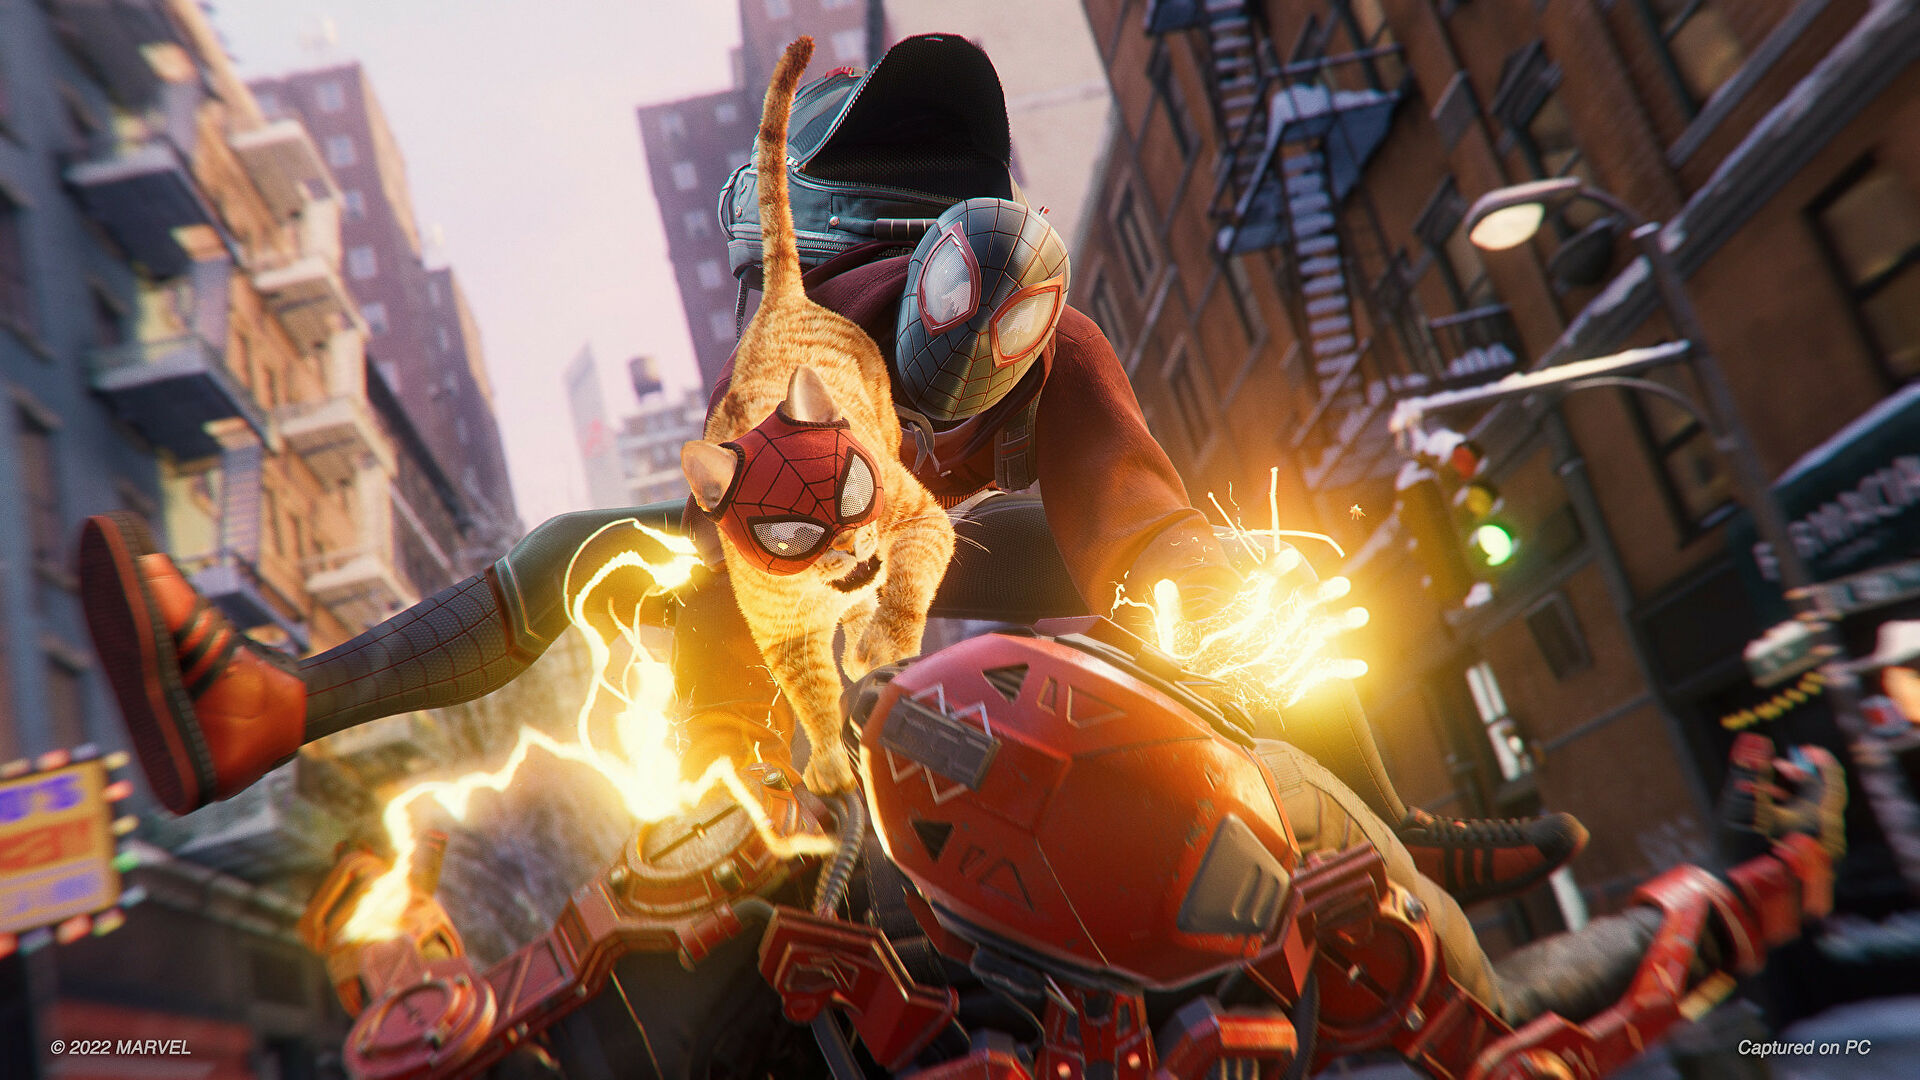 Marvel’s Spider-Man: Miles Morales hits PC on November 18